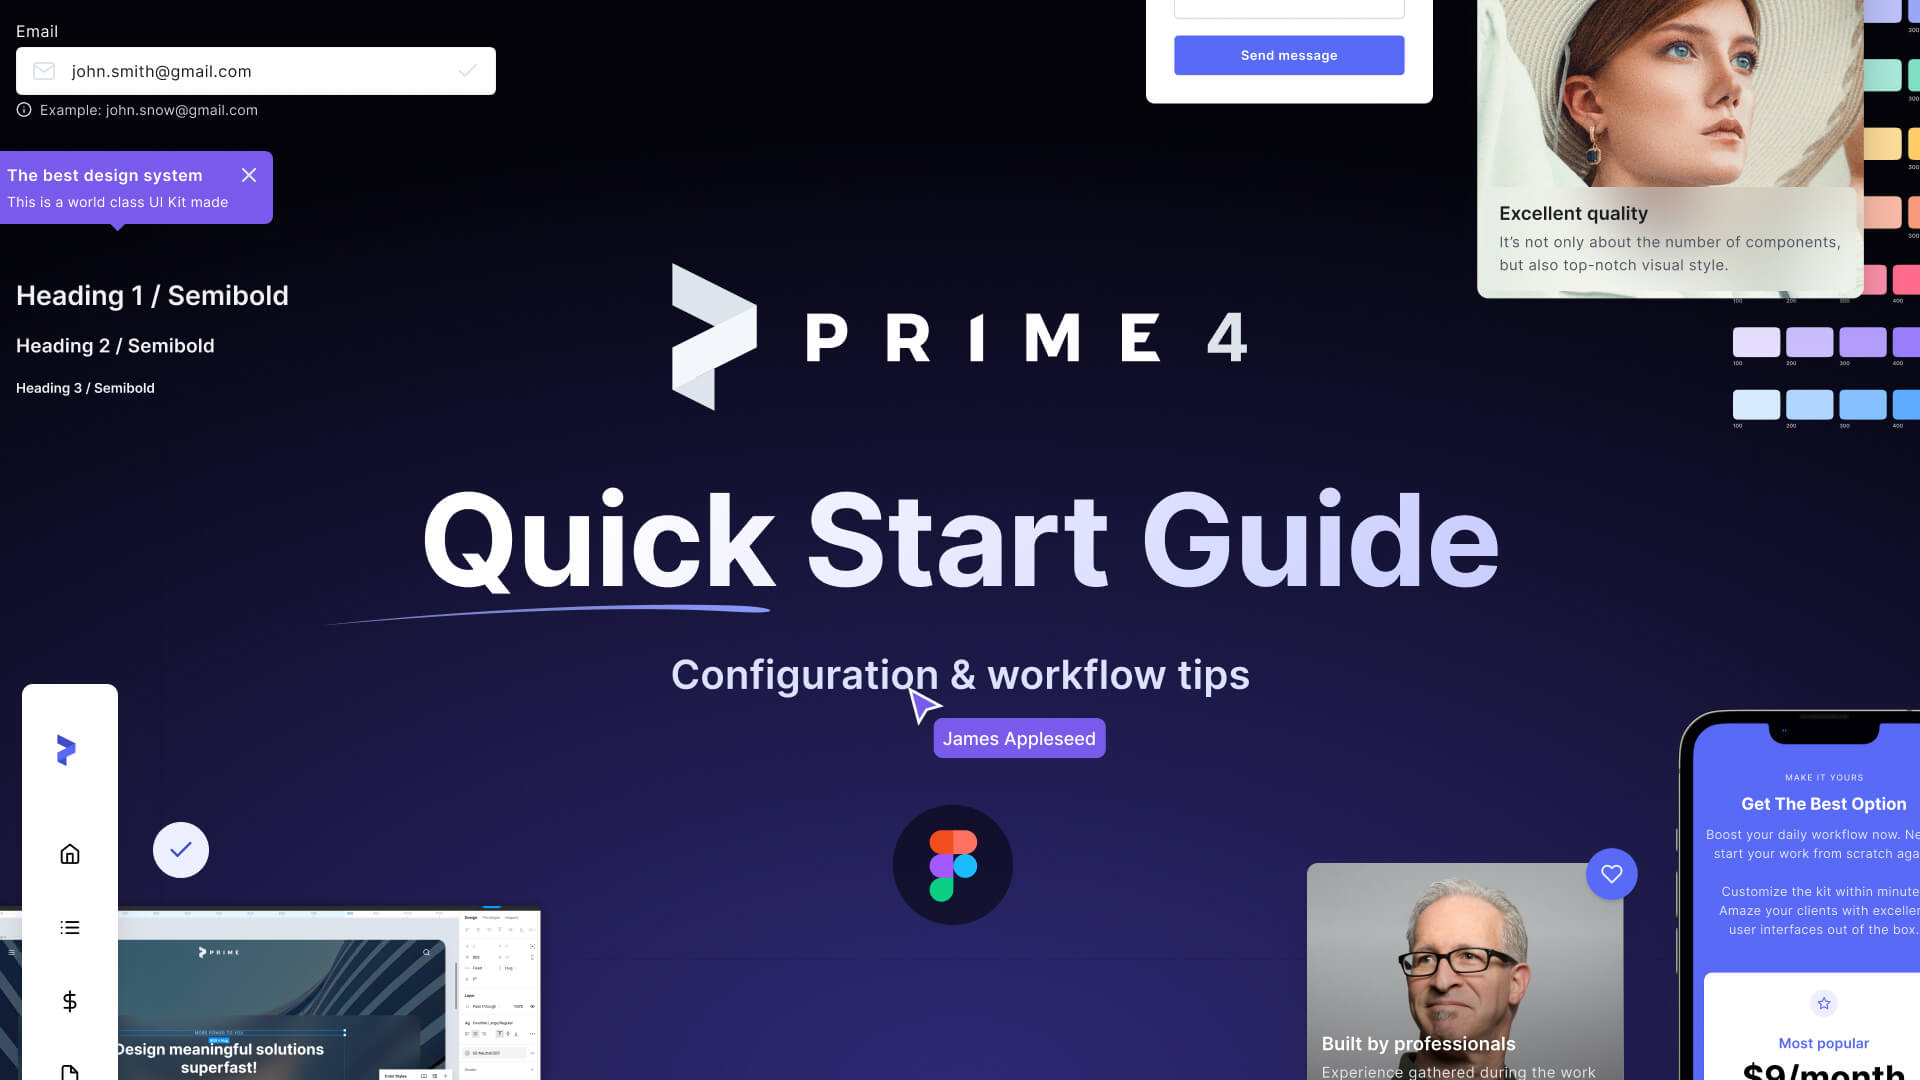 Prime 4.0 quick start guide image